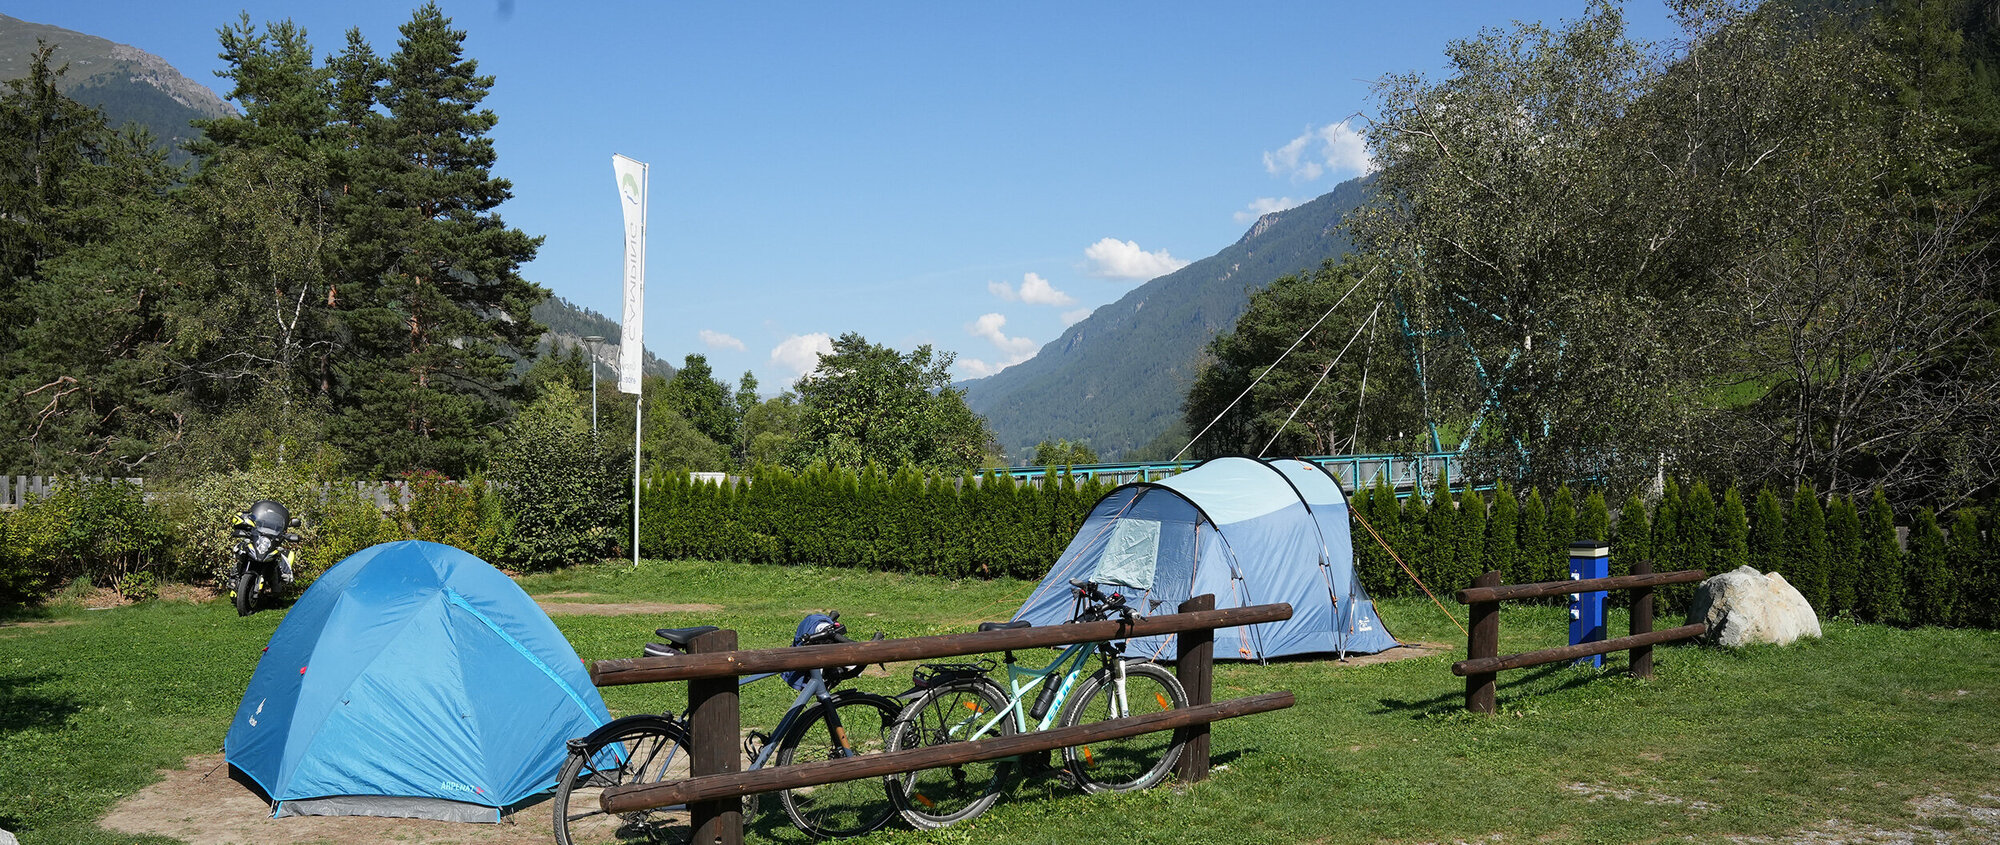 Zeltplatz Camping Via Claudiasee